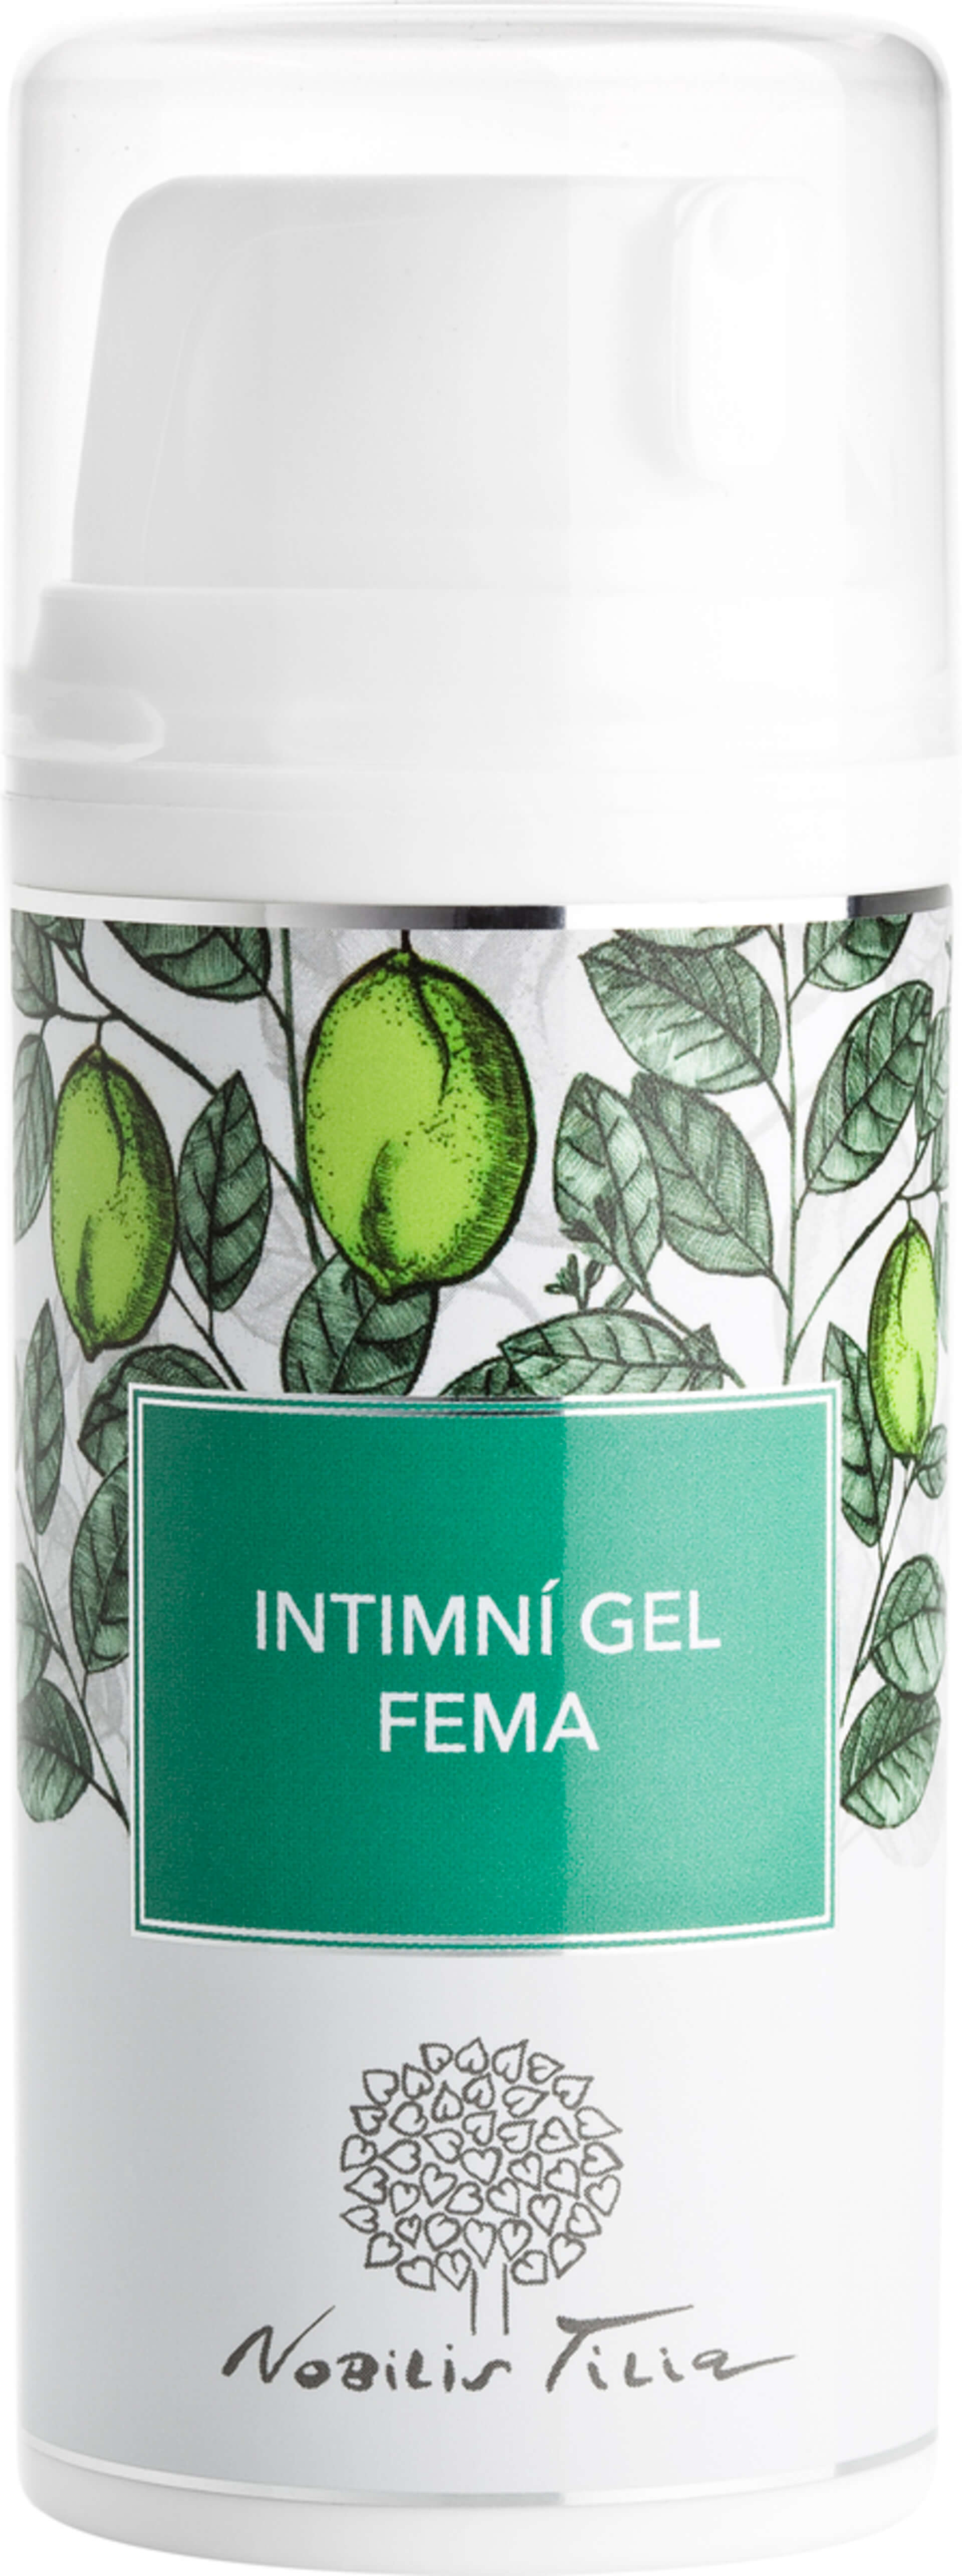 Levně Nobilis Tilia Intimní gel Fema 100 ml